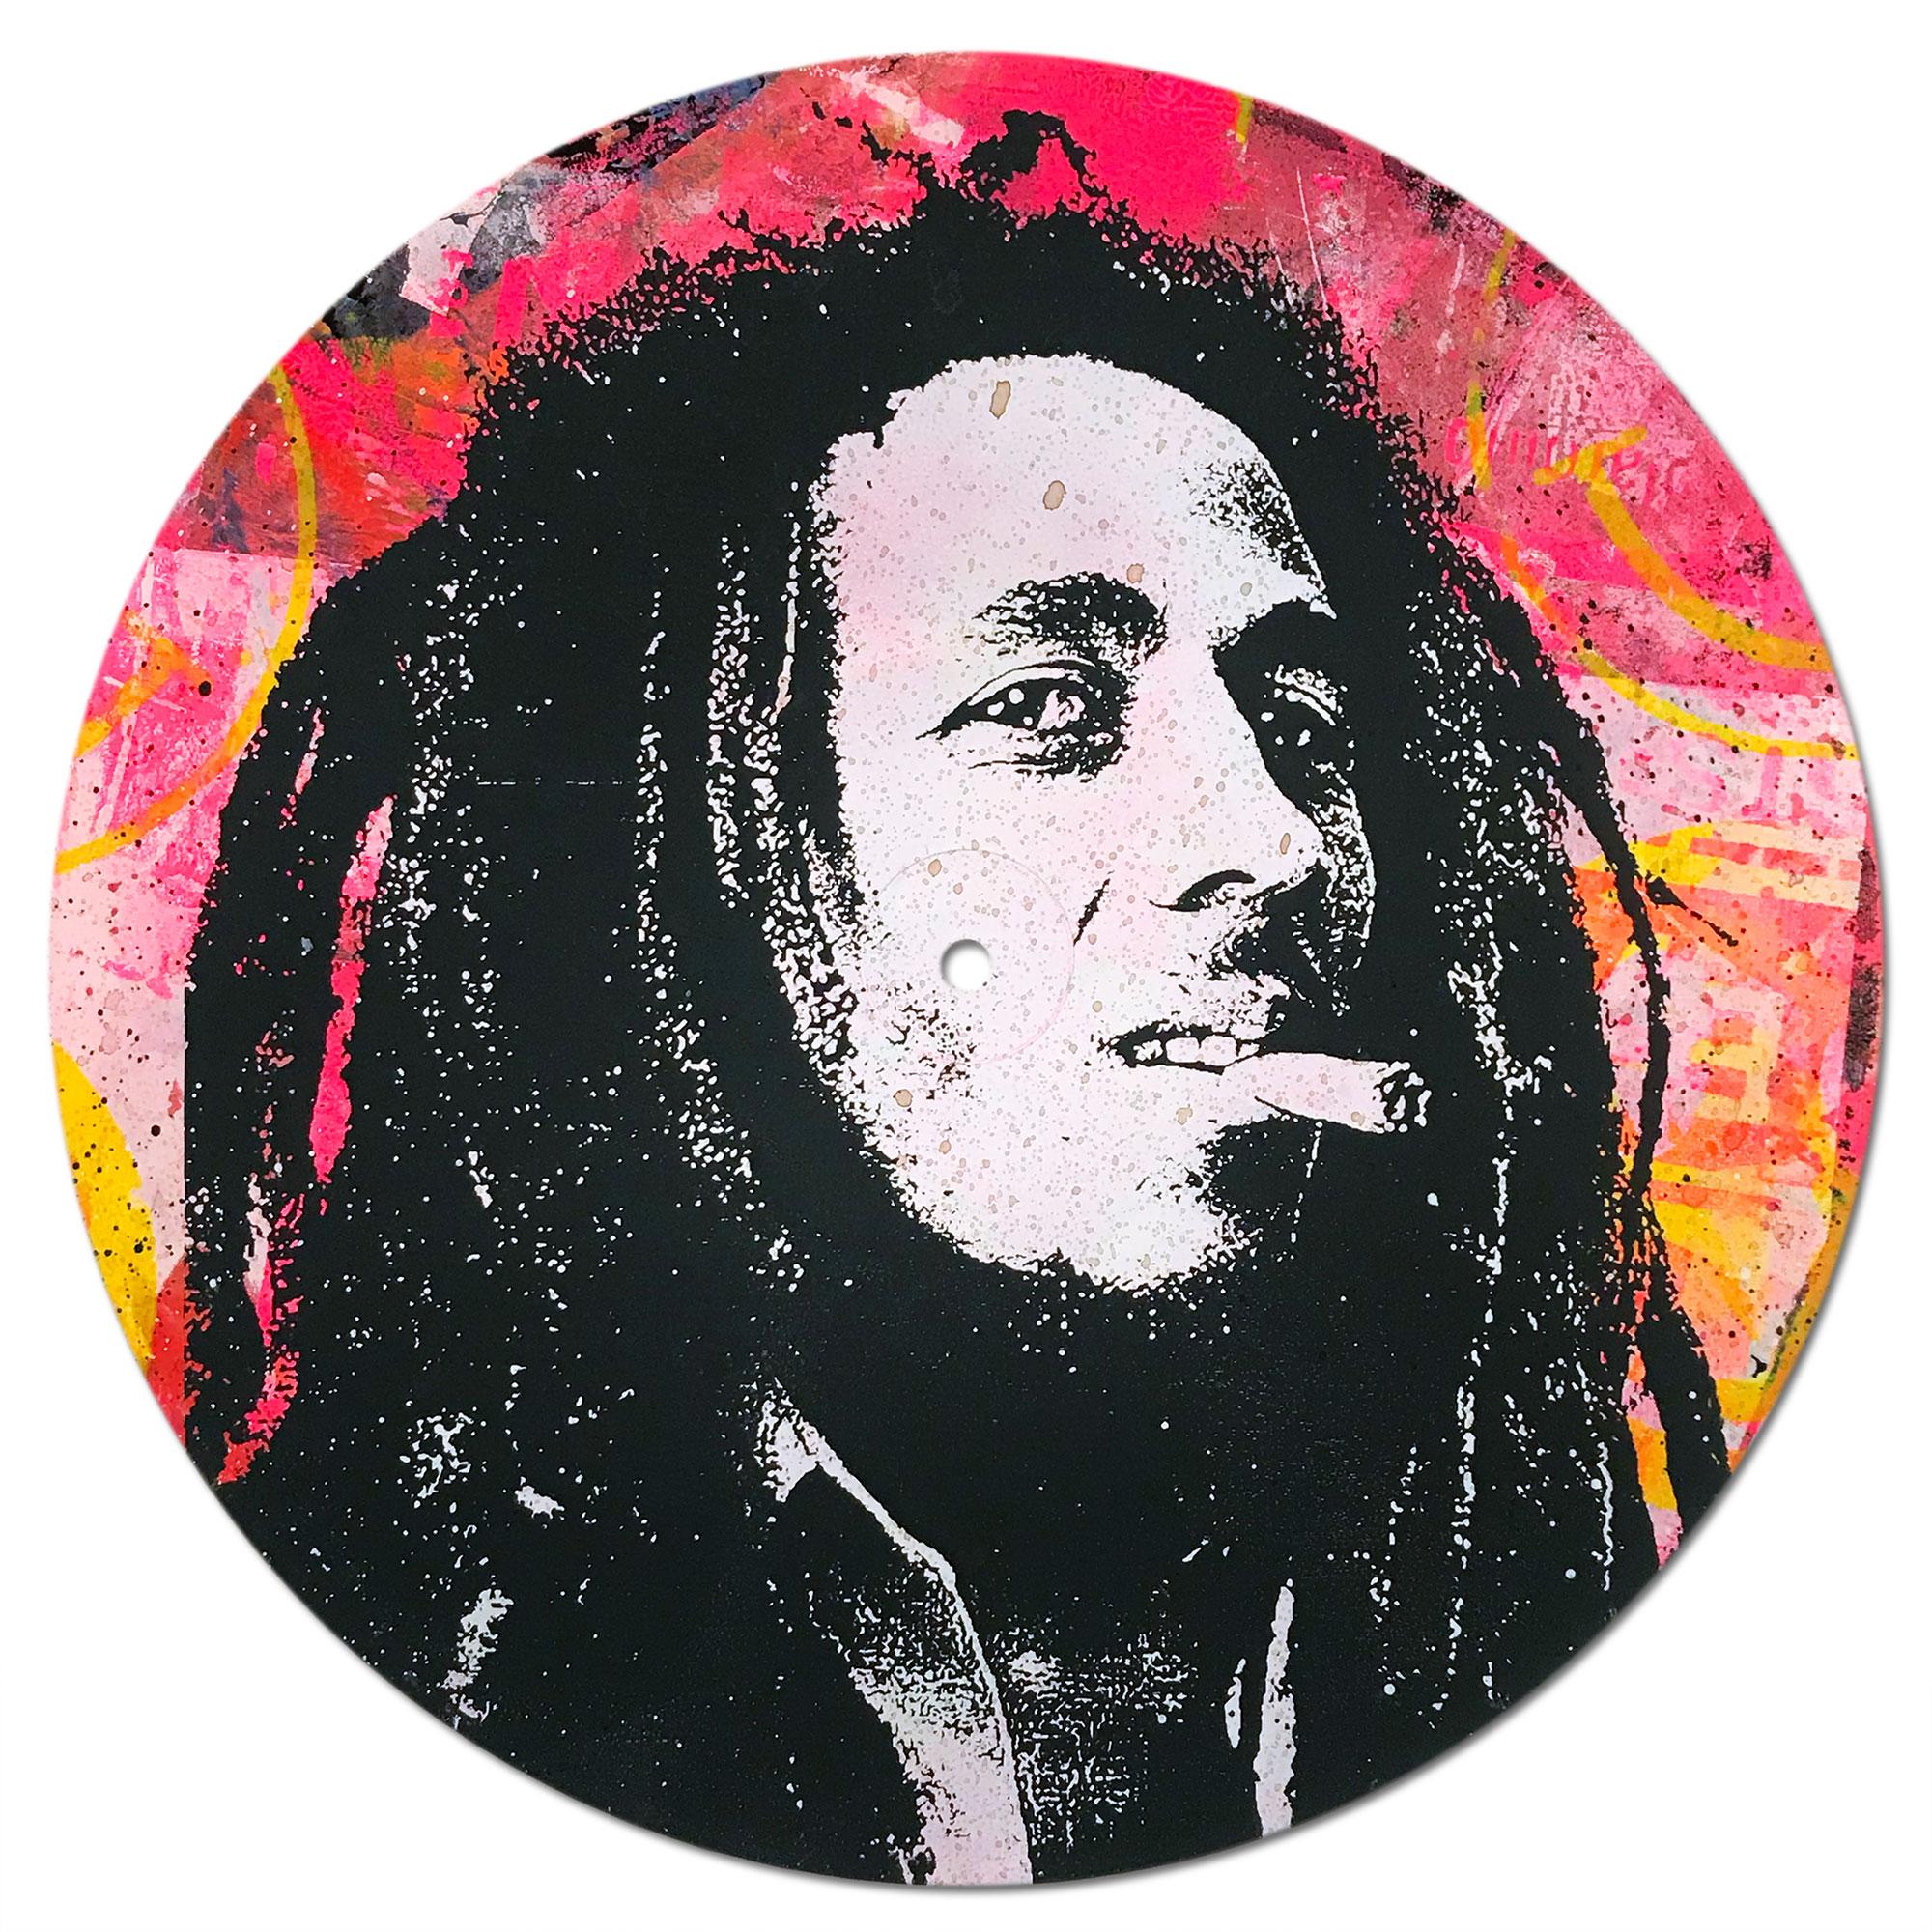 Bob Marley Vinyl 1-10, Greg Gossel Pop Art LP Record (Singles & Sets Available) For Sale 2